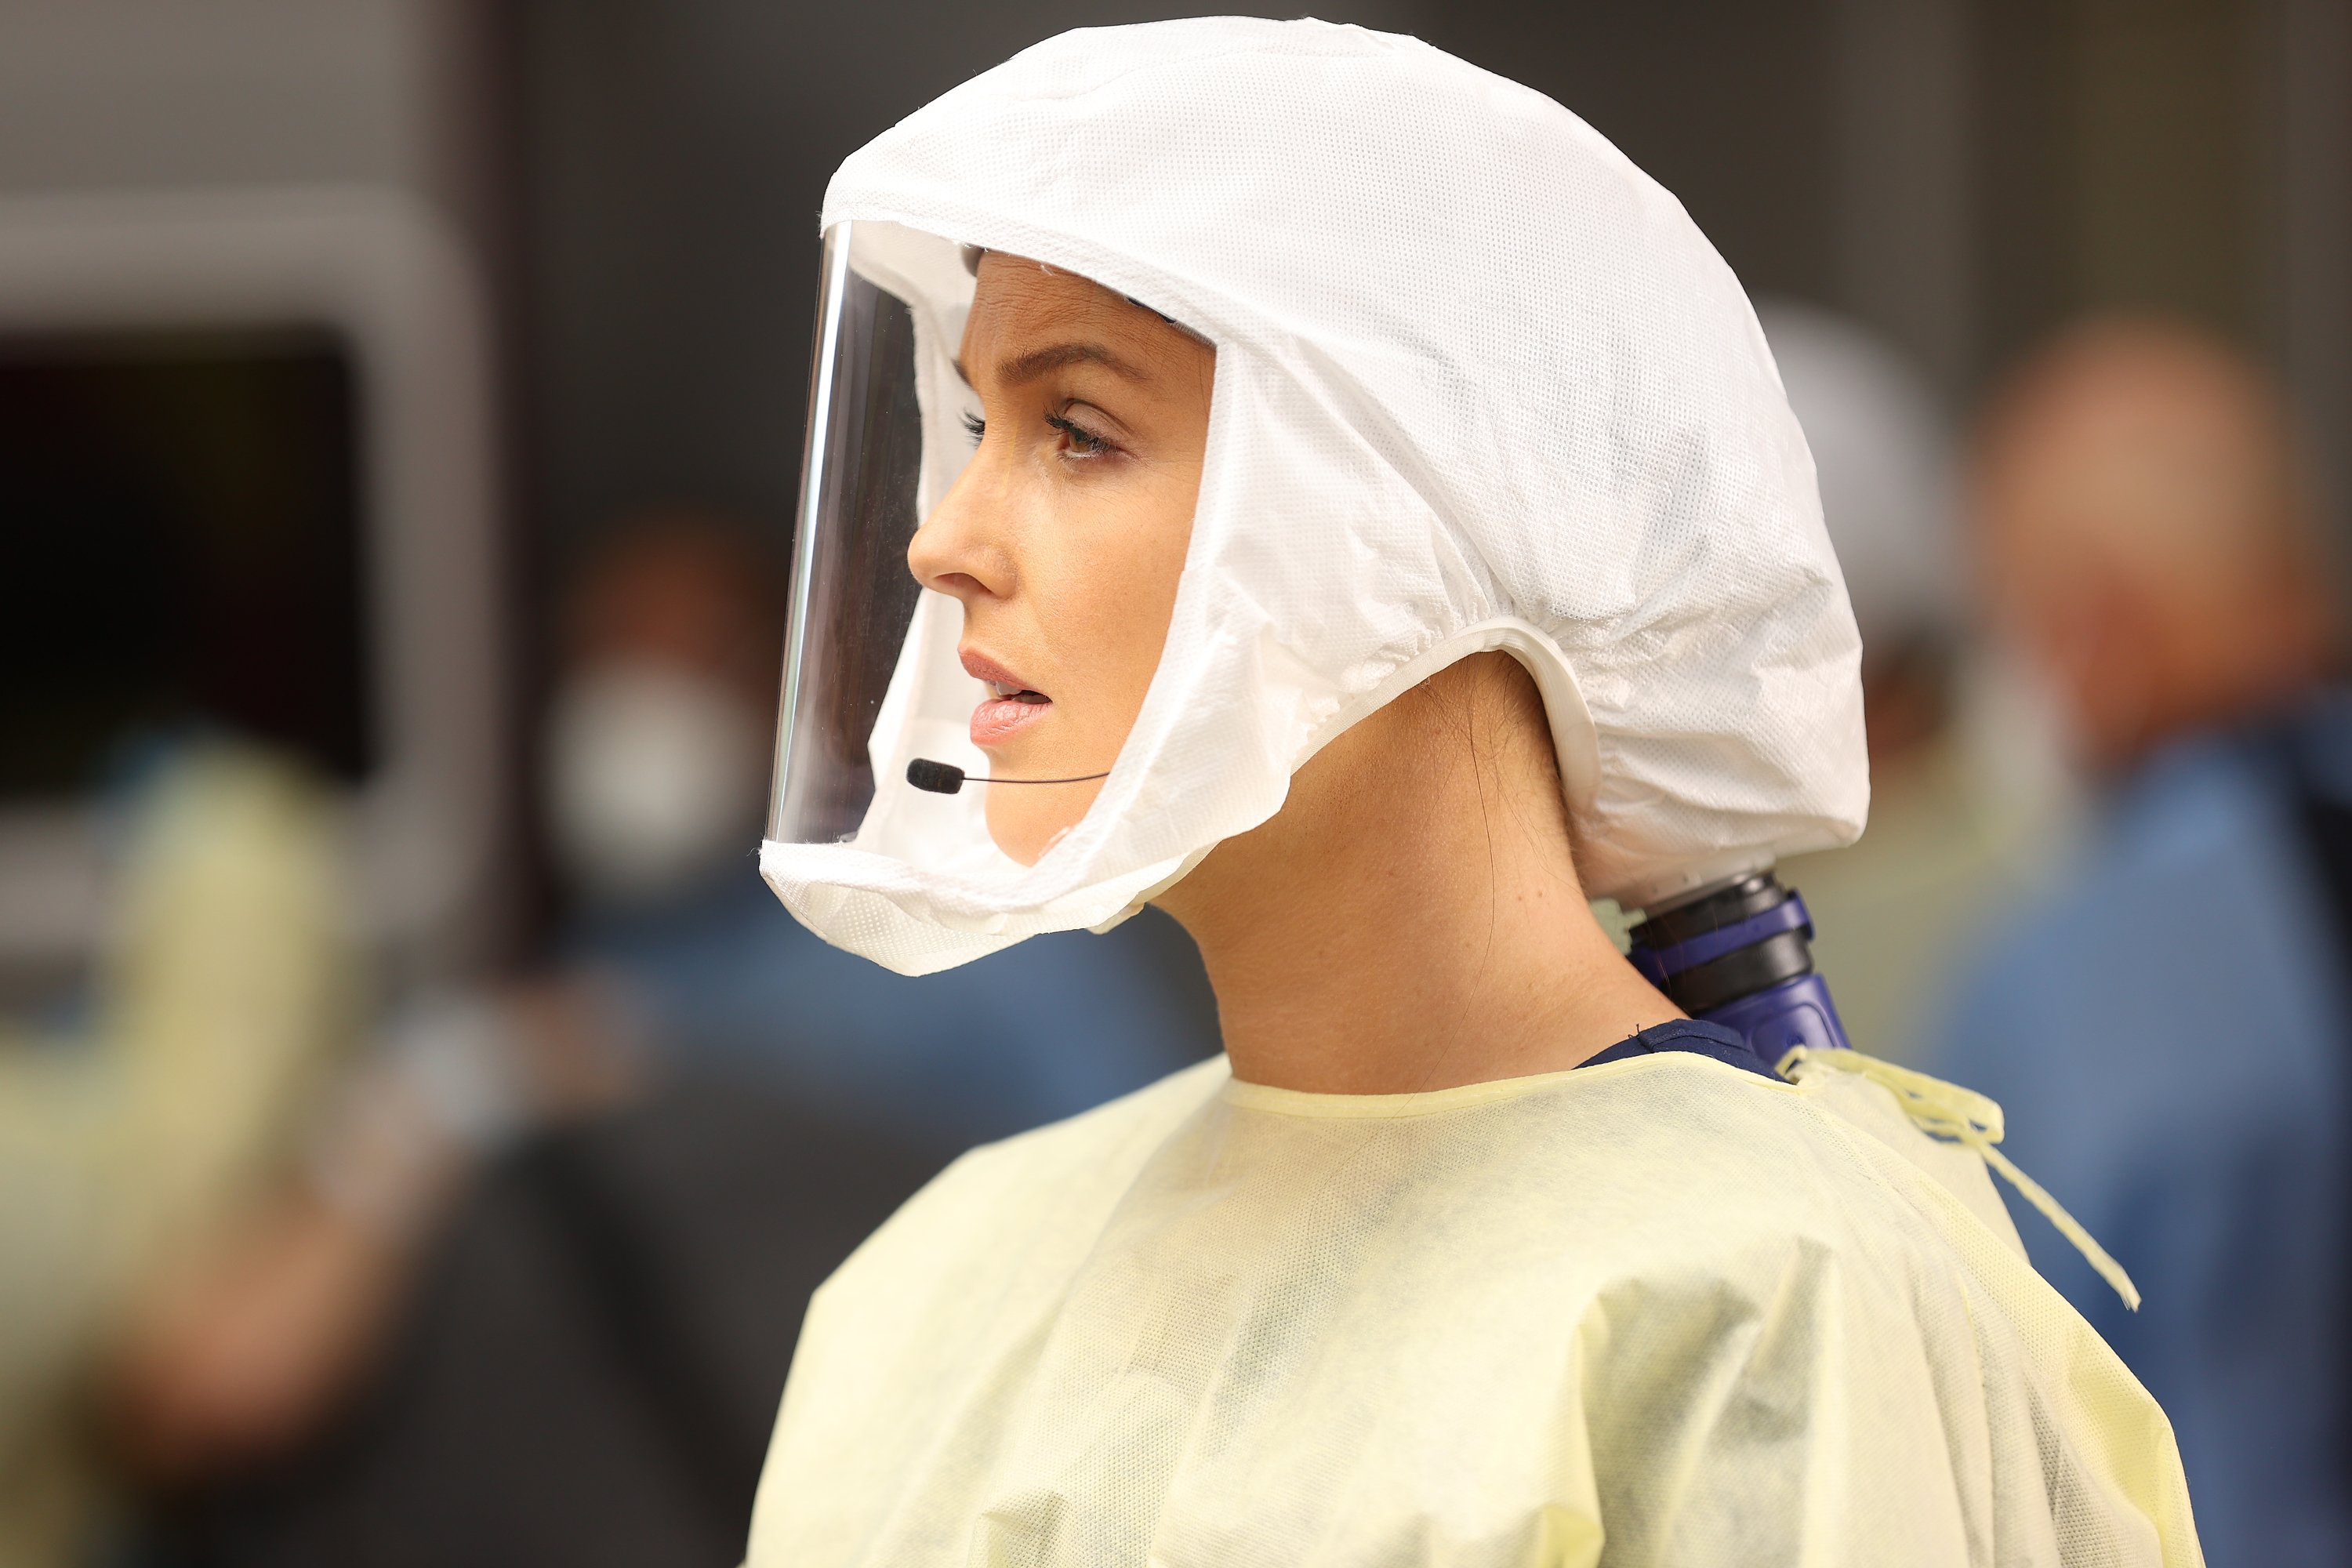 Camilla Luddington on the set of Grey's Anatomy as the cast films season 17.